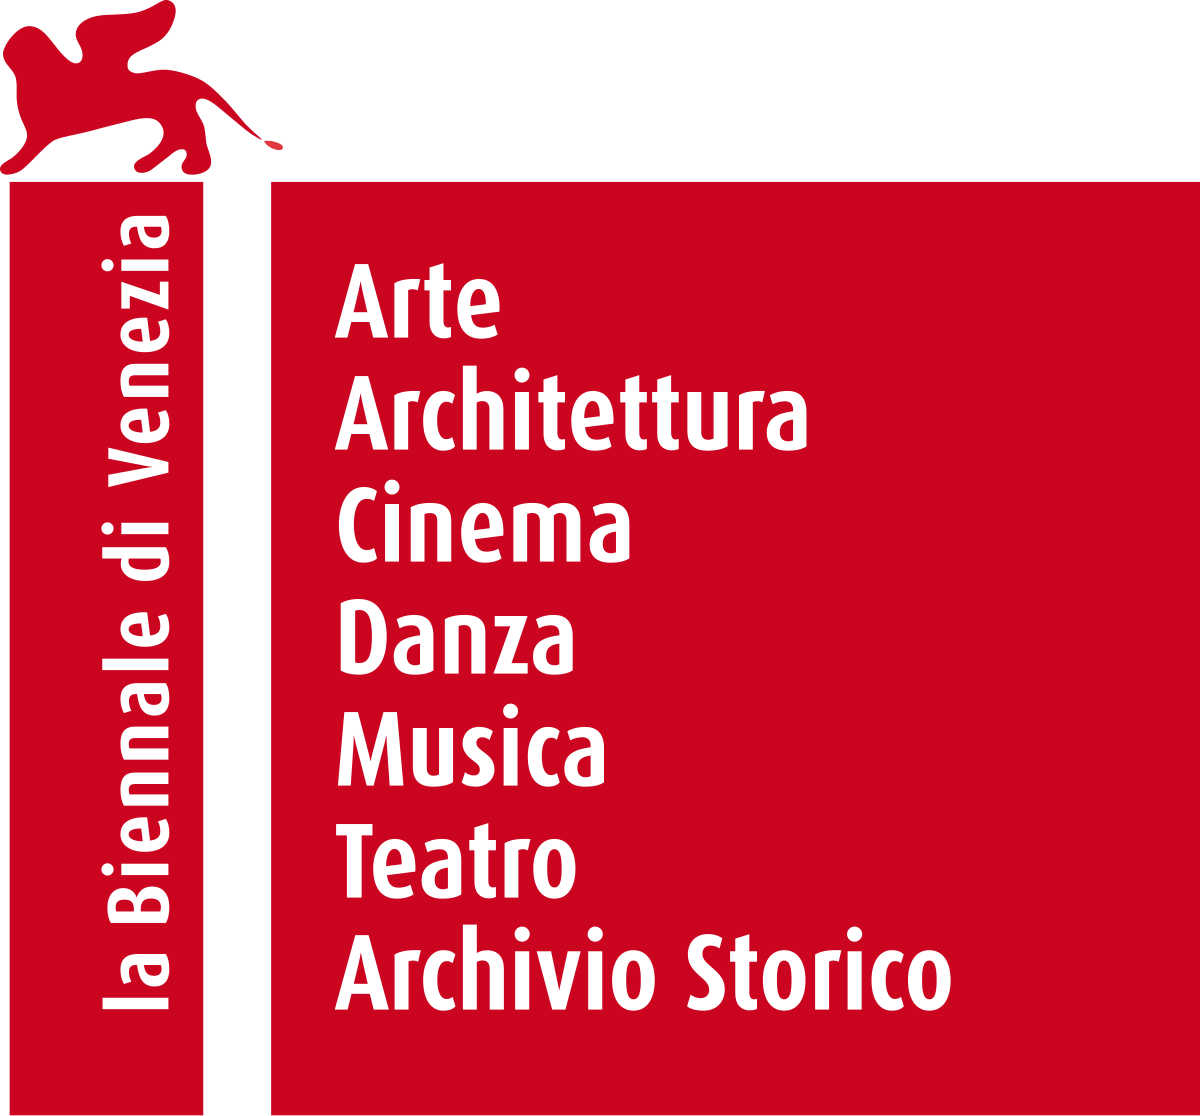 festival cinema showing